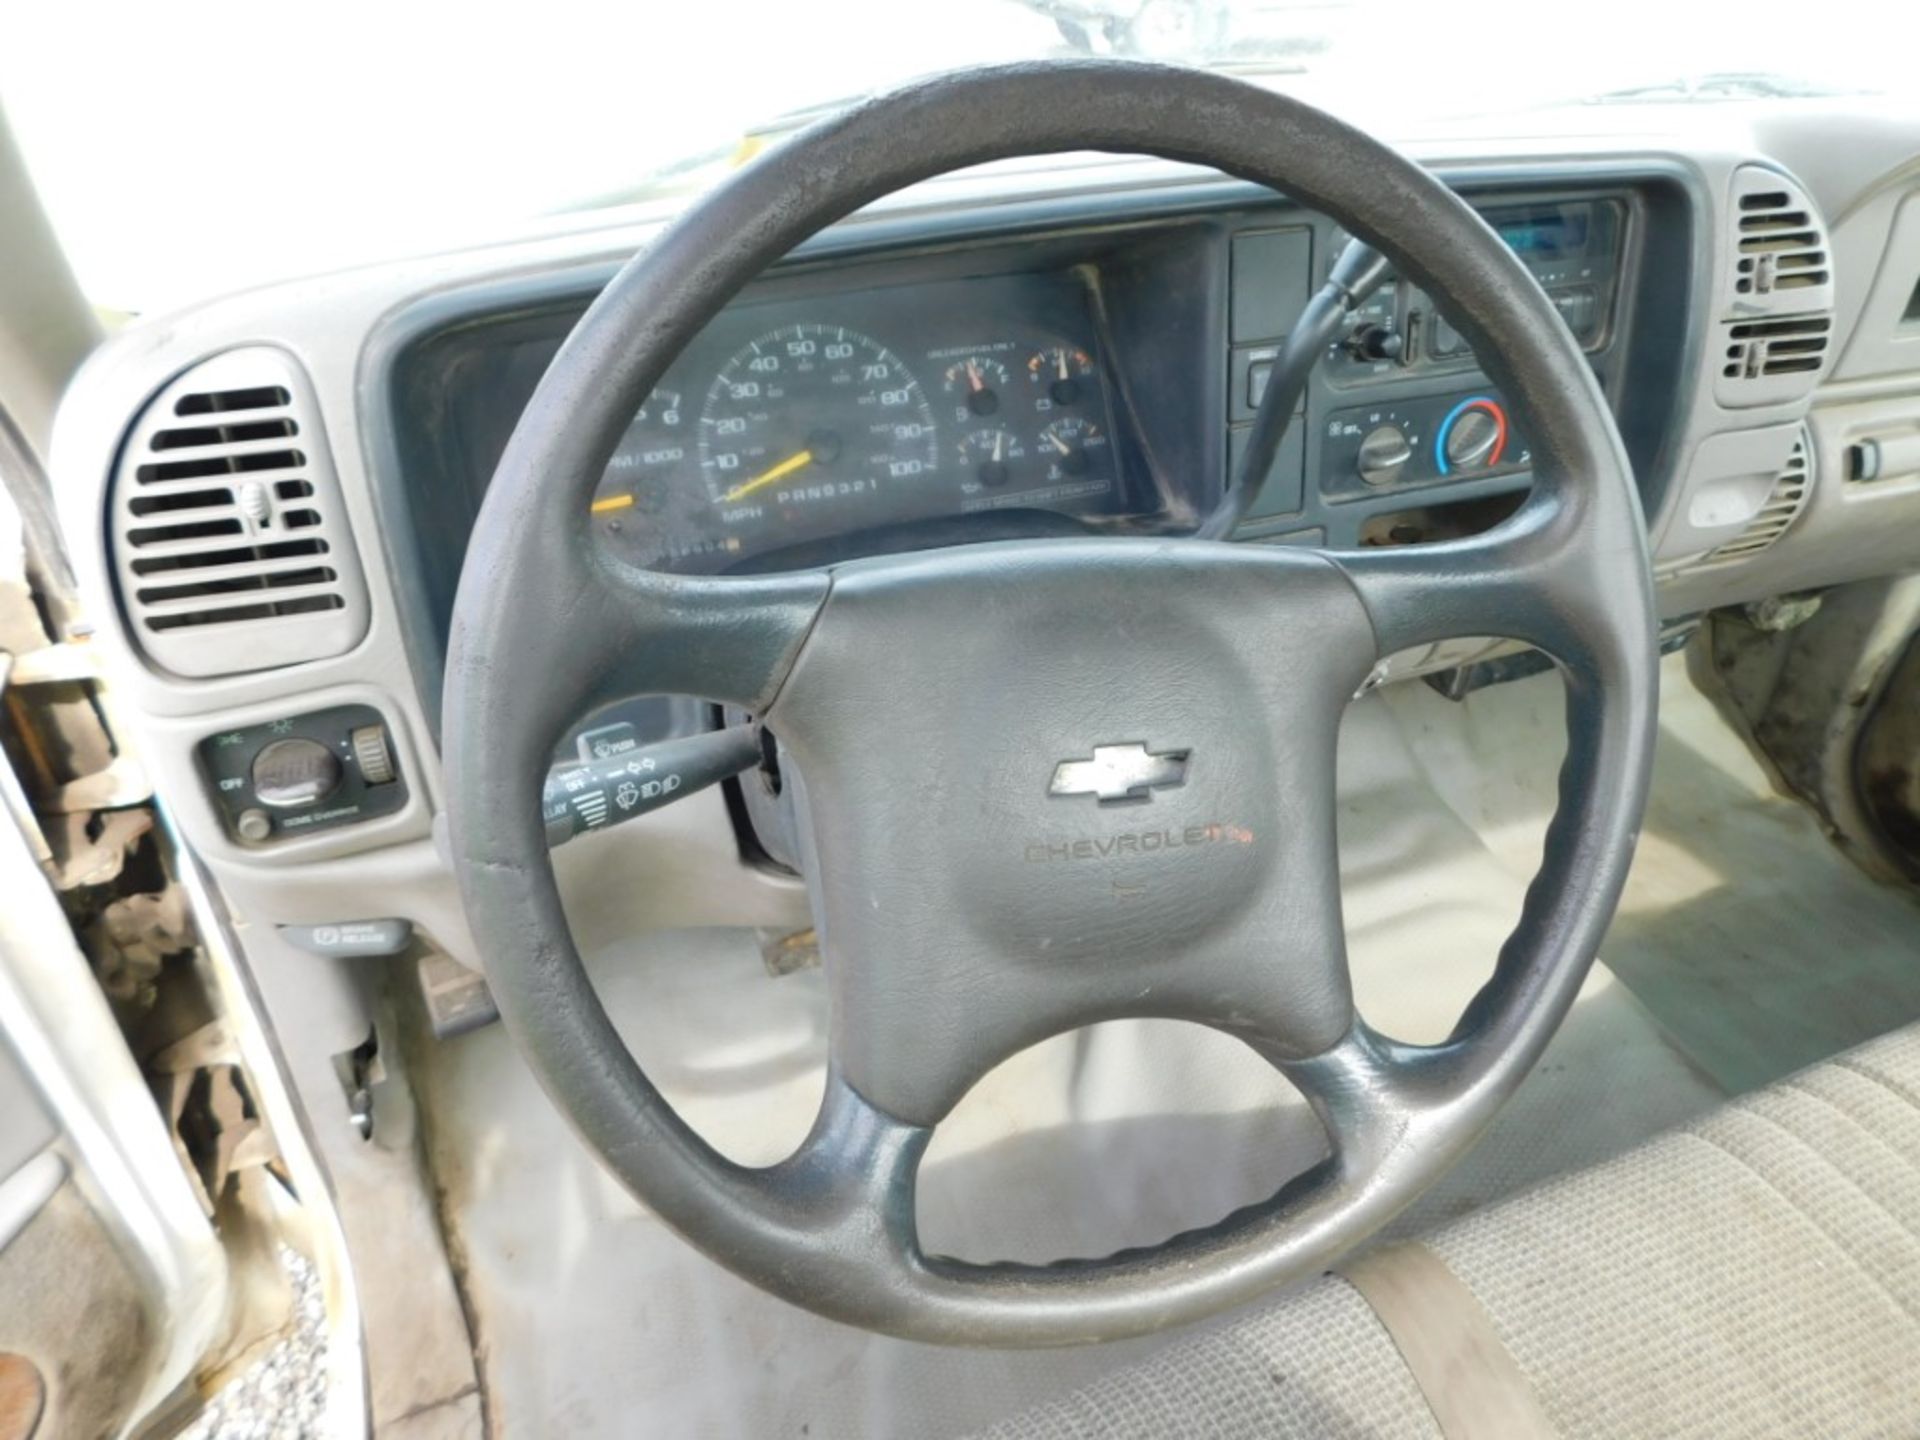 1998 Chevrolet 2500 Pickup, VIN 1GCGC24R0WZ261062, Automatic, AM/FM, Regular Cab, Ladder Rack, 8' - Image 33 of 38